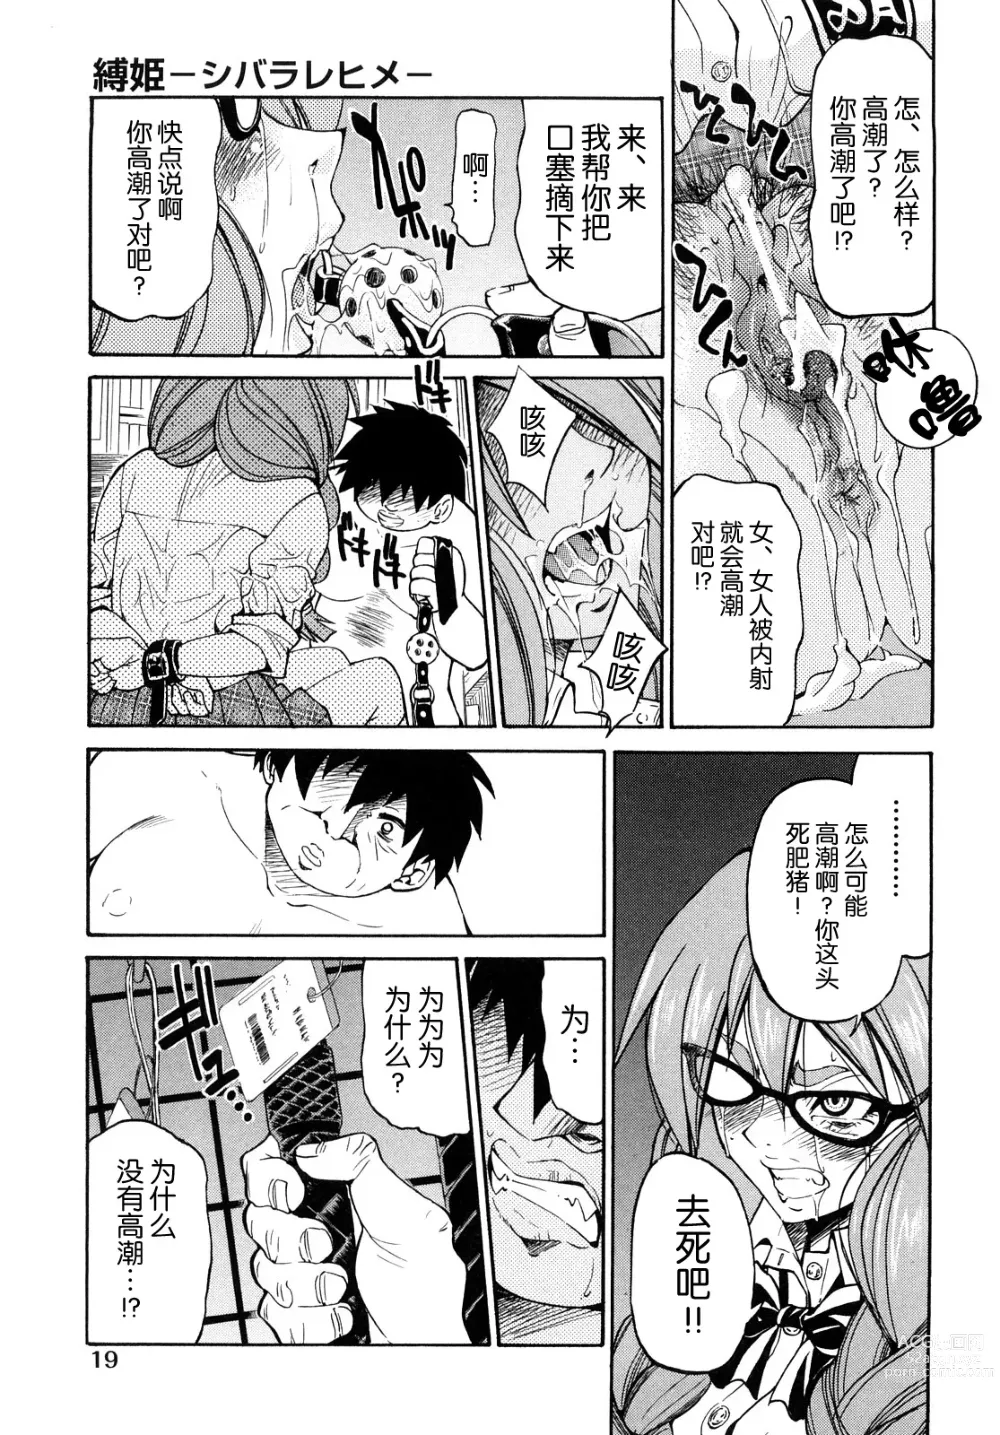 Page 22 of manga Shibarare Hime